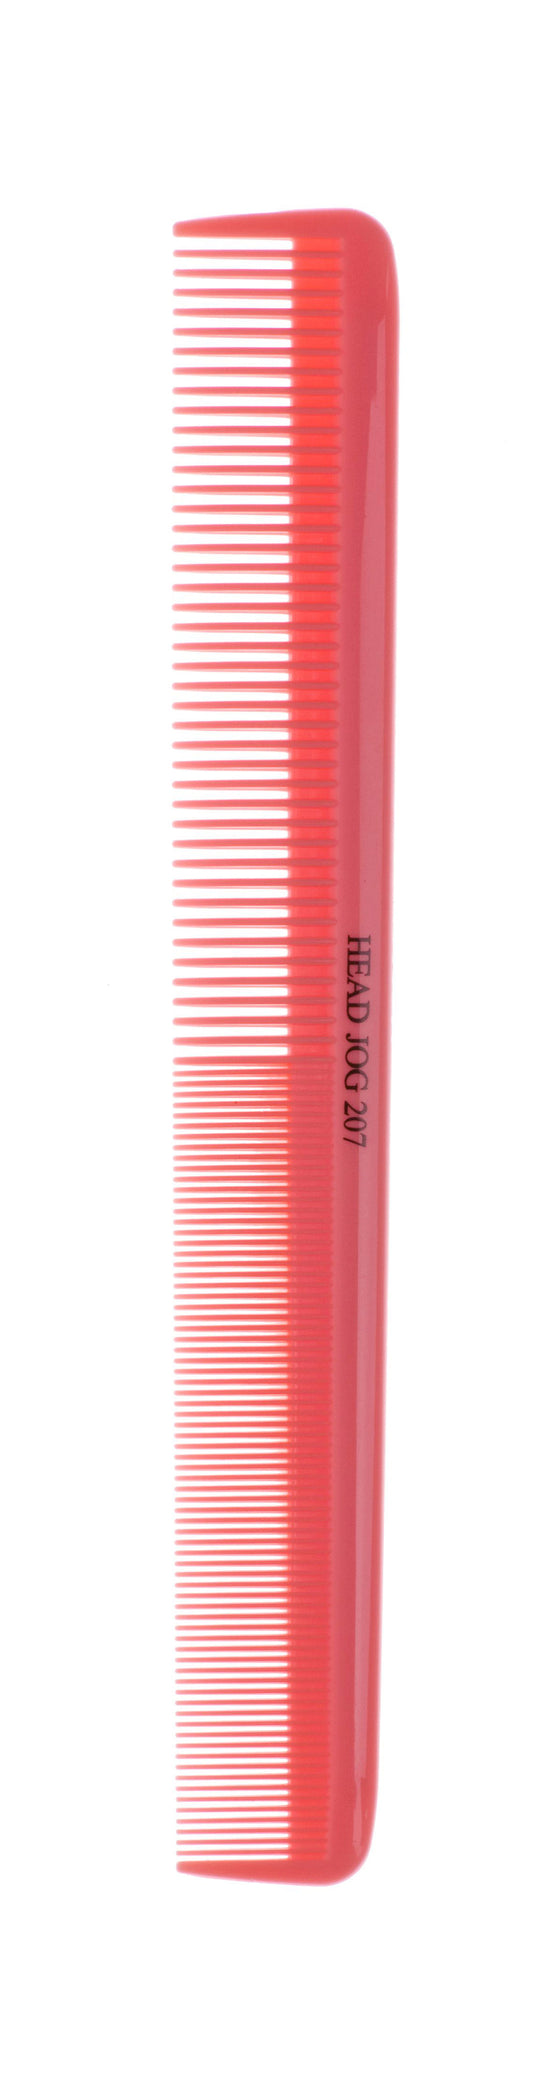 Head Jog 207 Large Cutting Comb Pink